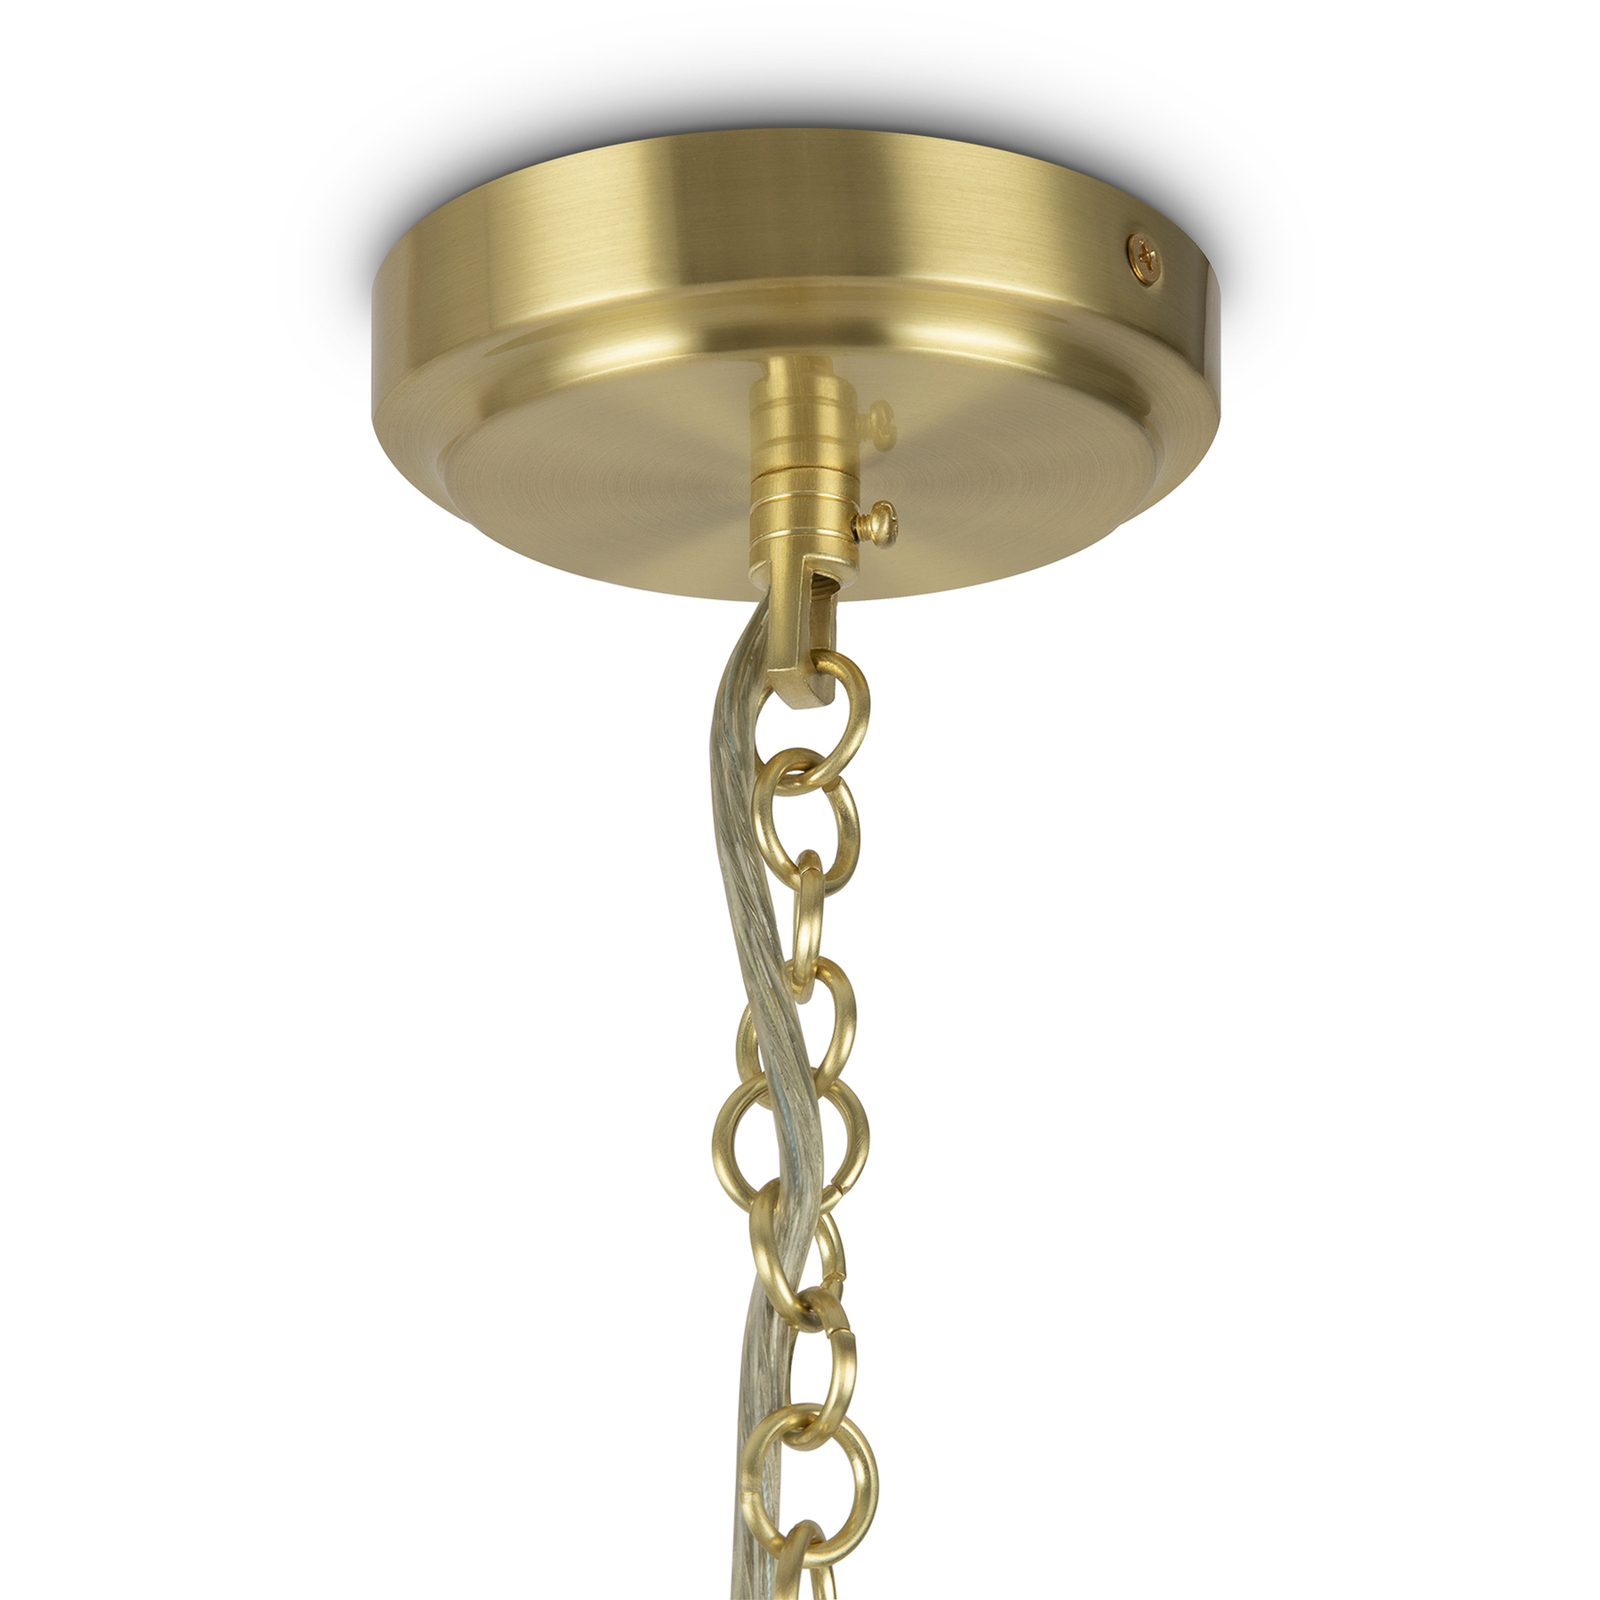 Maytoni Impressive pendant light with chain hanging